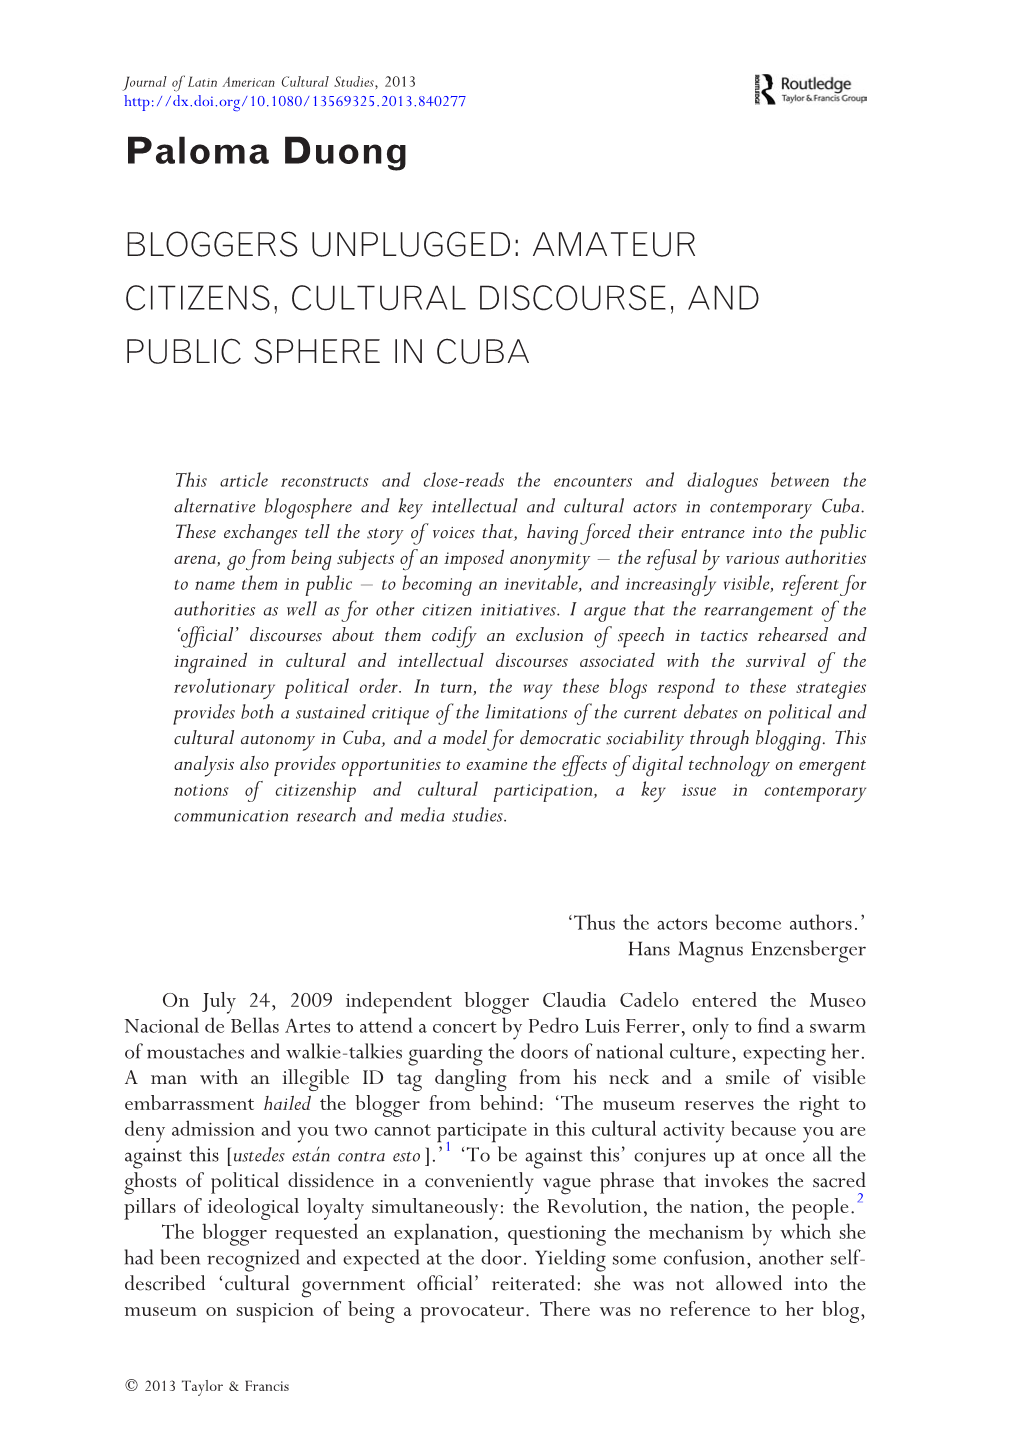 Bloggers Unplugged: Amateur Citizens, Cultural Discourse, and Public Sphere in Cuba